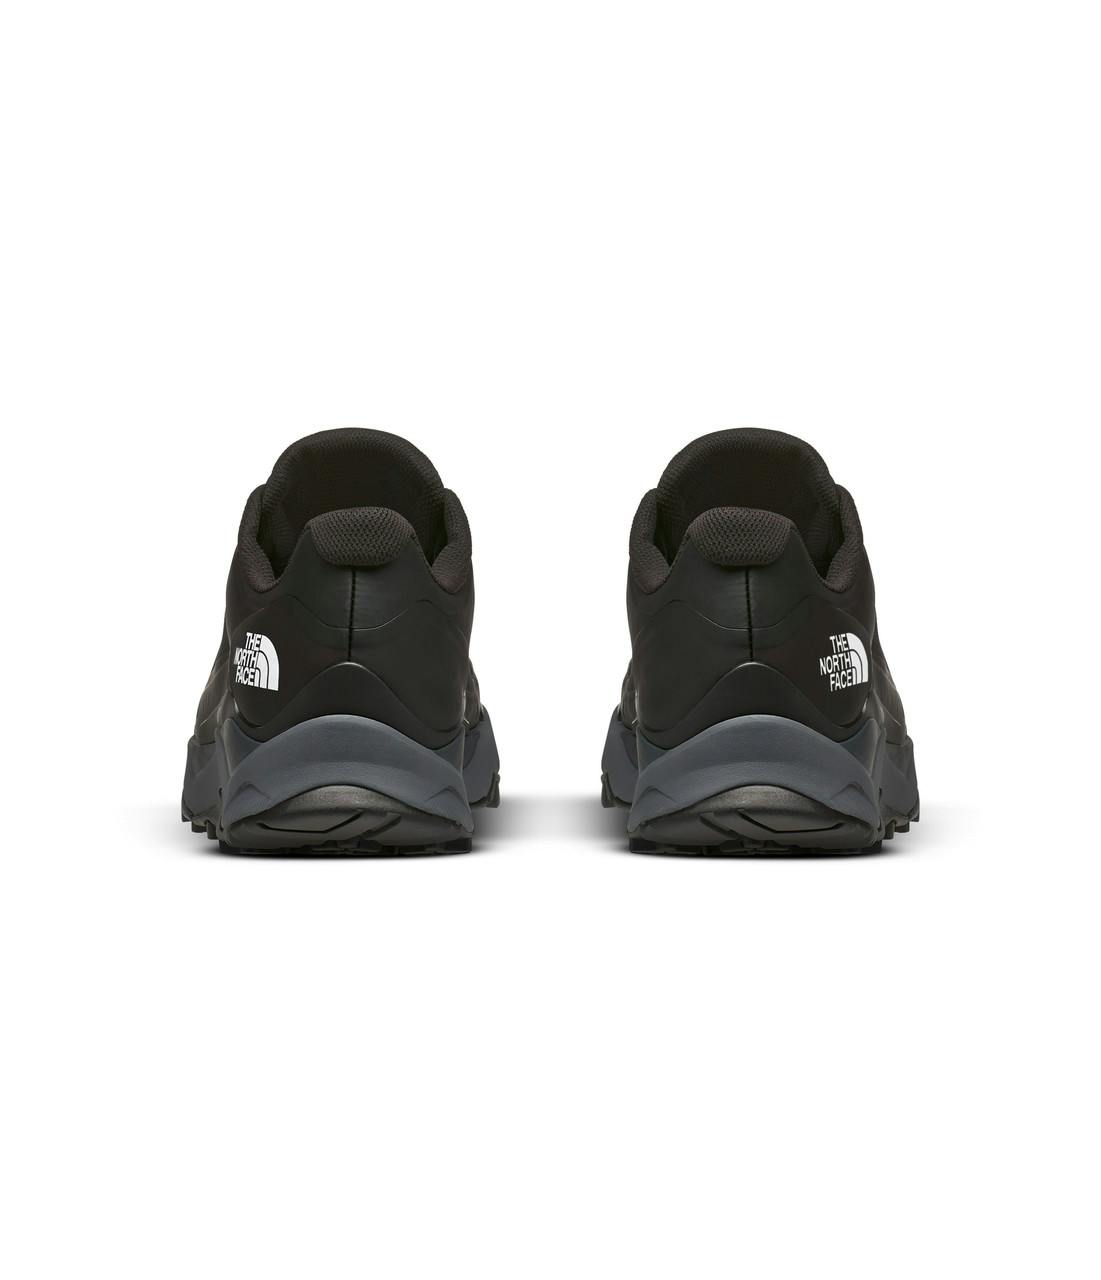 Vectiv Exploris Futurelight Light Trail Shoes TNF Black/Zinc Grey